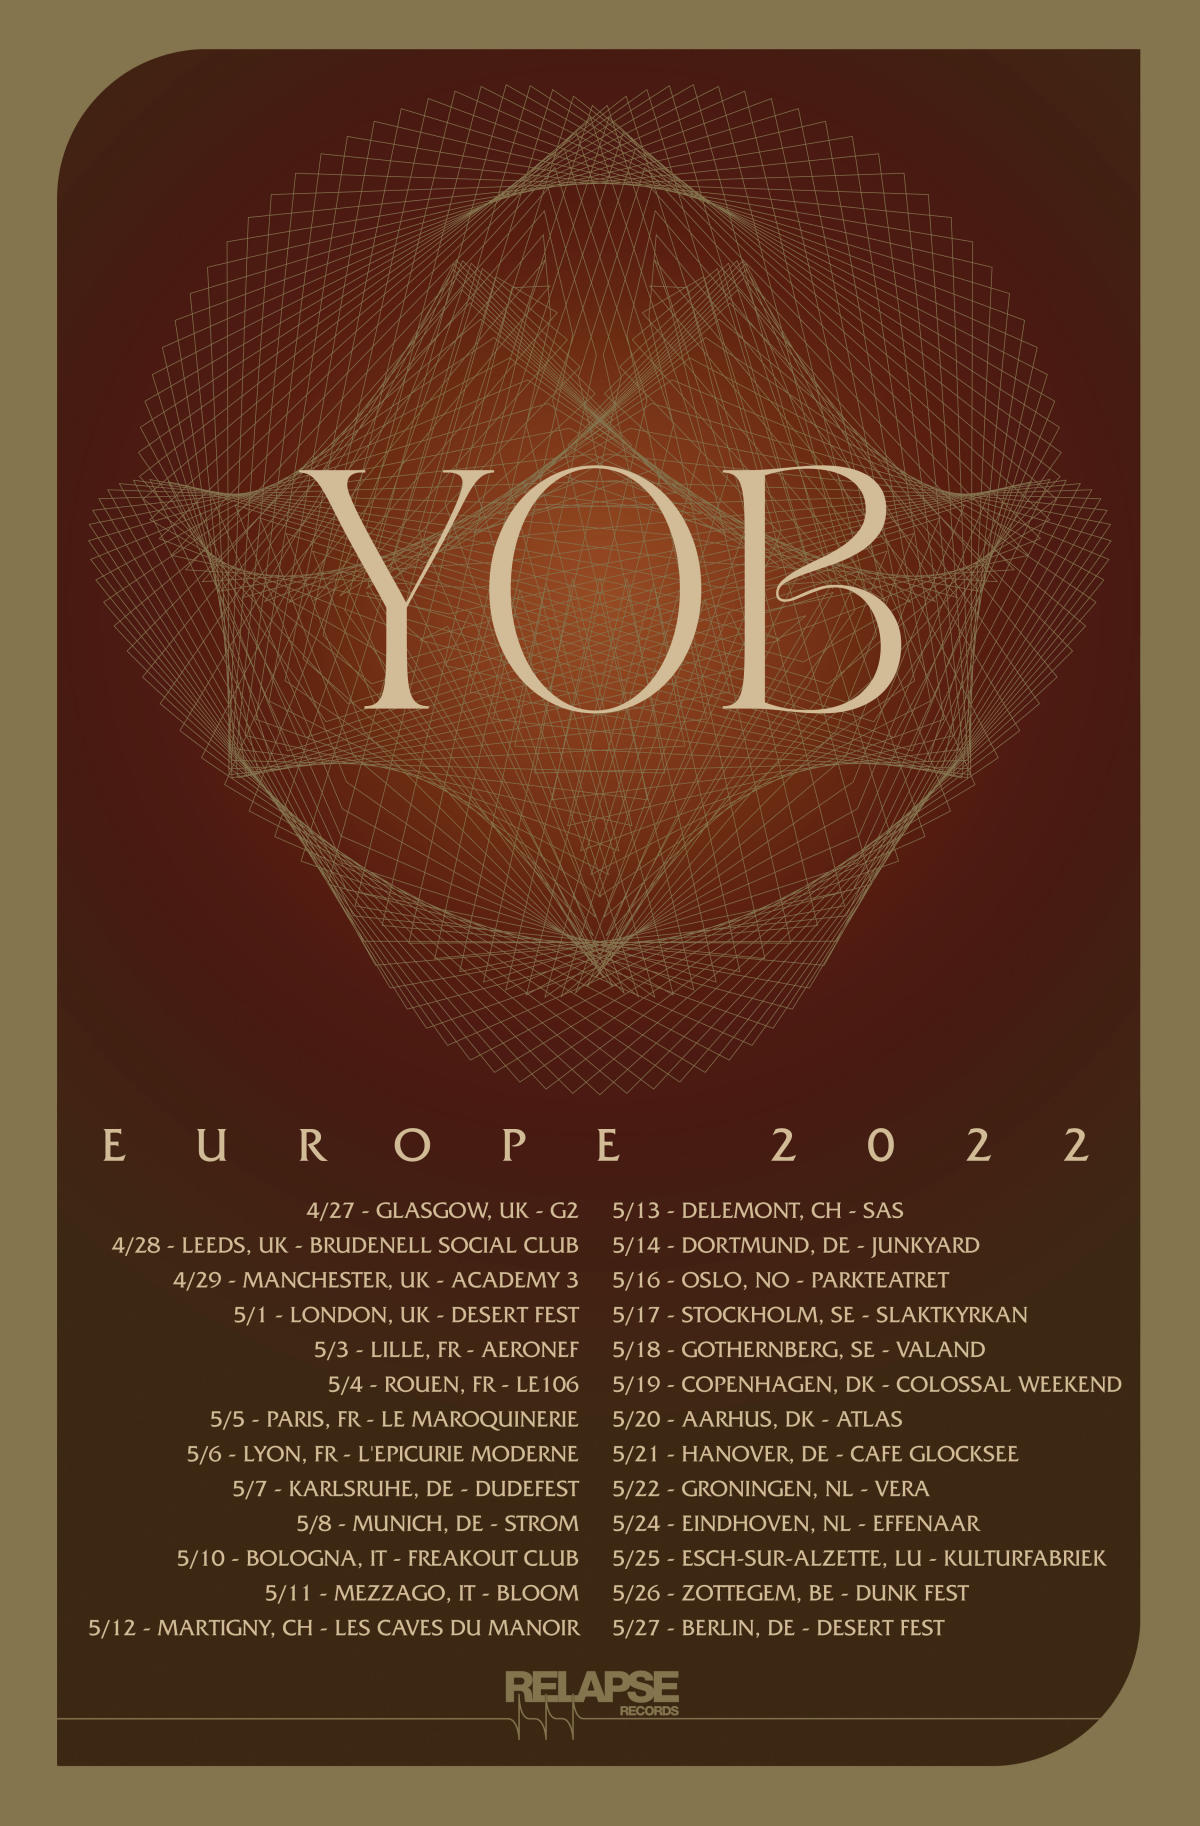 yob uk tour 2022